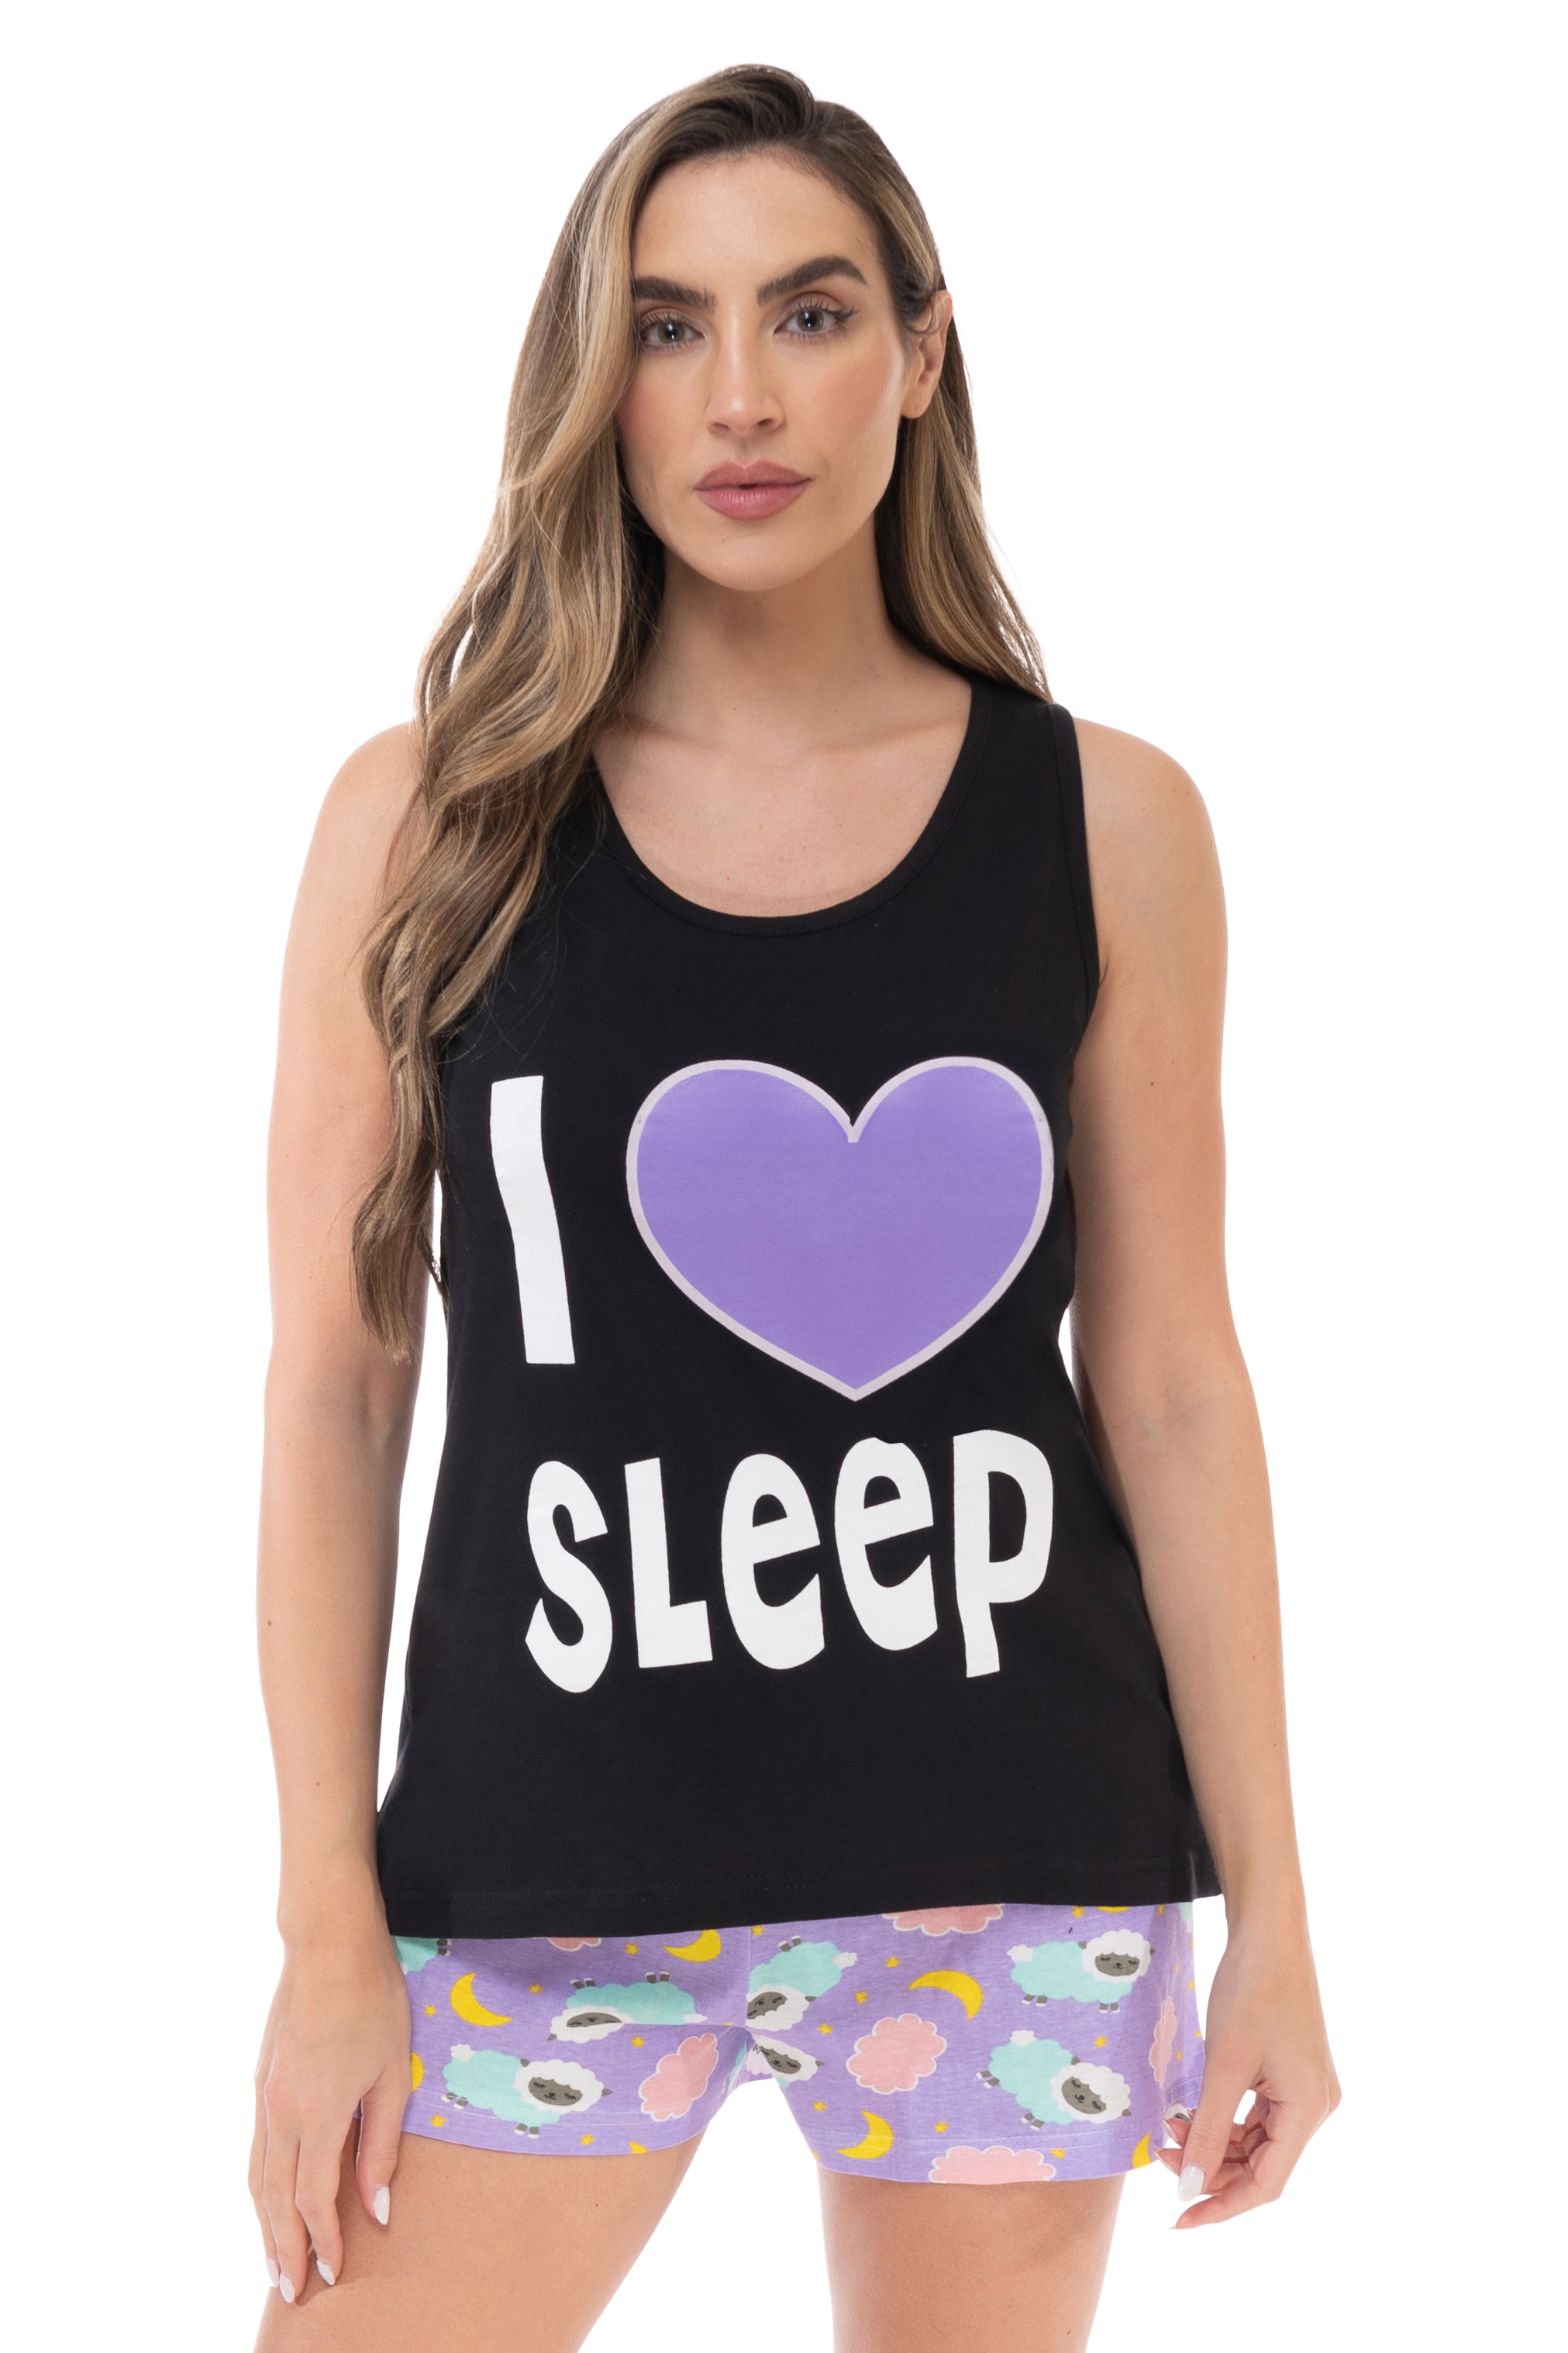 Just Love 100% Cotton Women Sleepwear Pajama Sets (Black - Love Sleep Sheep, 3X) - image 1 of 3